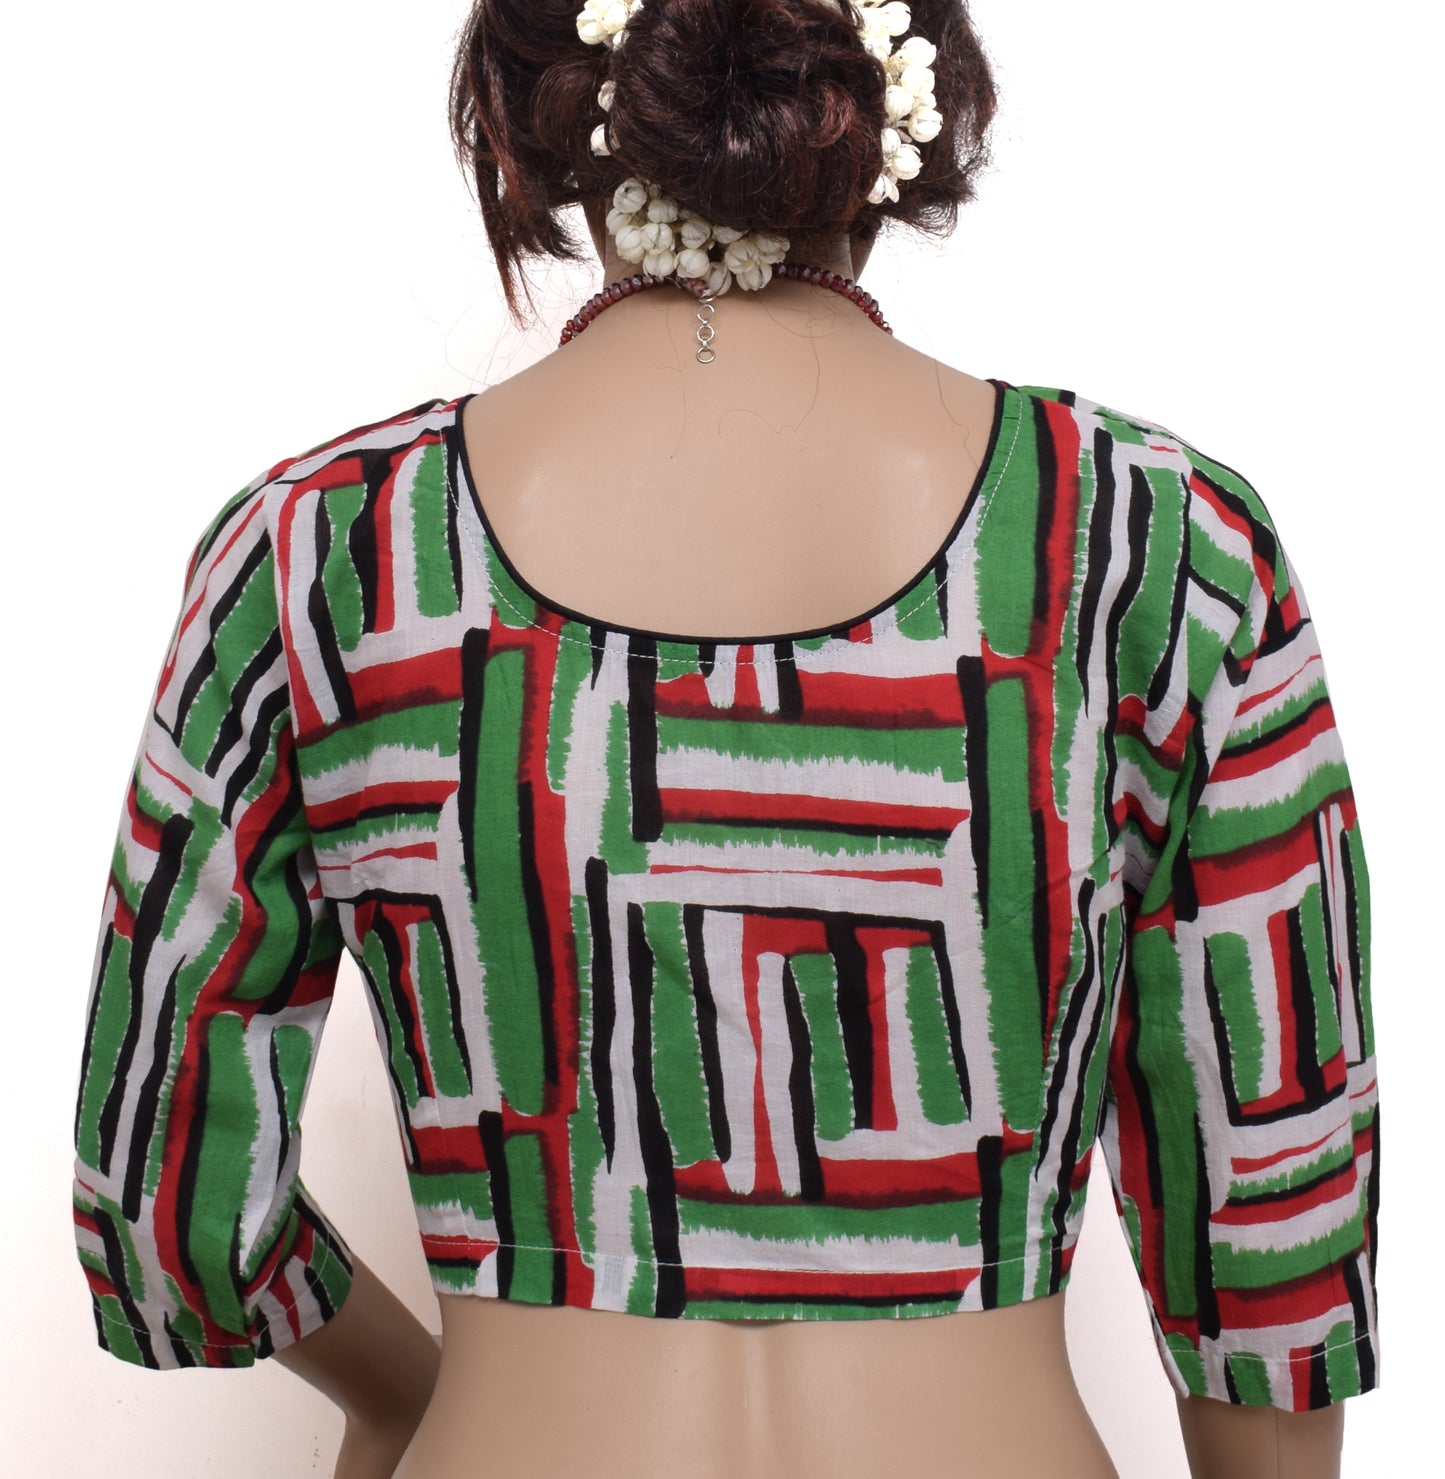 Sushila New Top Readymade Stitched Sari Blouse 100% Pure Cotton Printed Choli